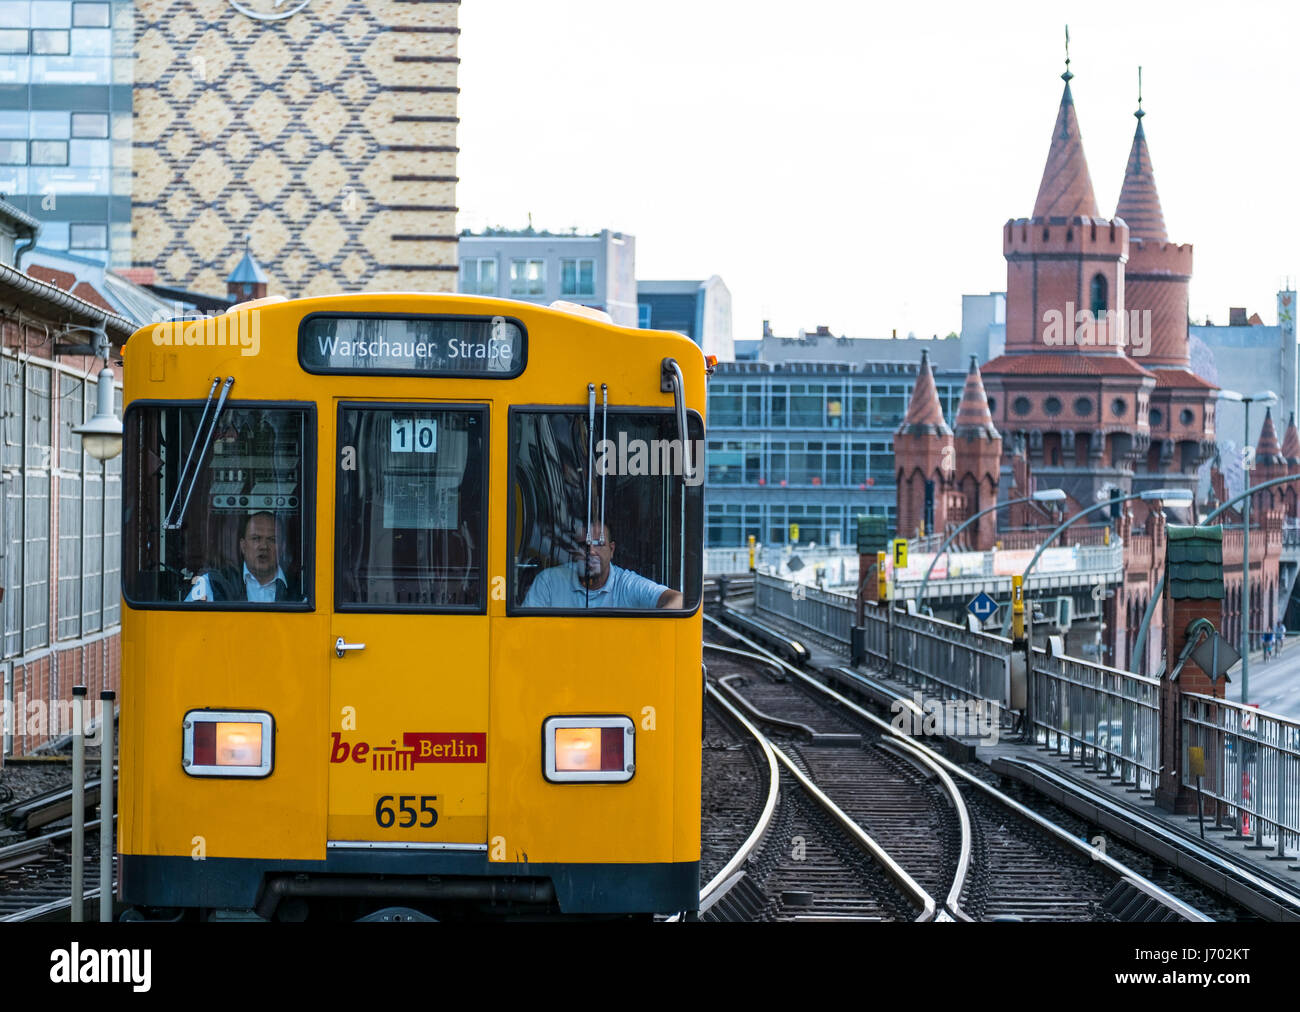 Berlin U-Bahn subway train at Warschauer Strasse station in berin, Germany Stock Photo